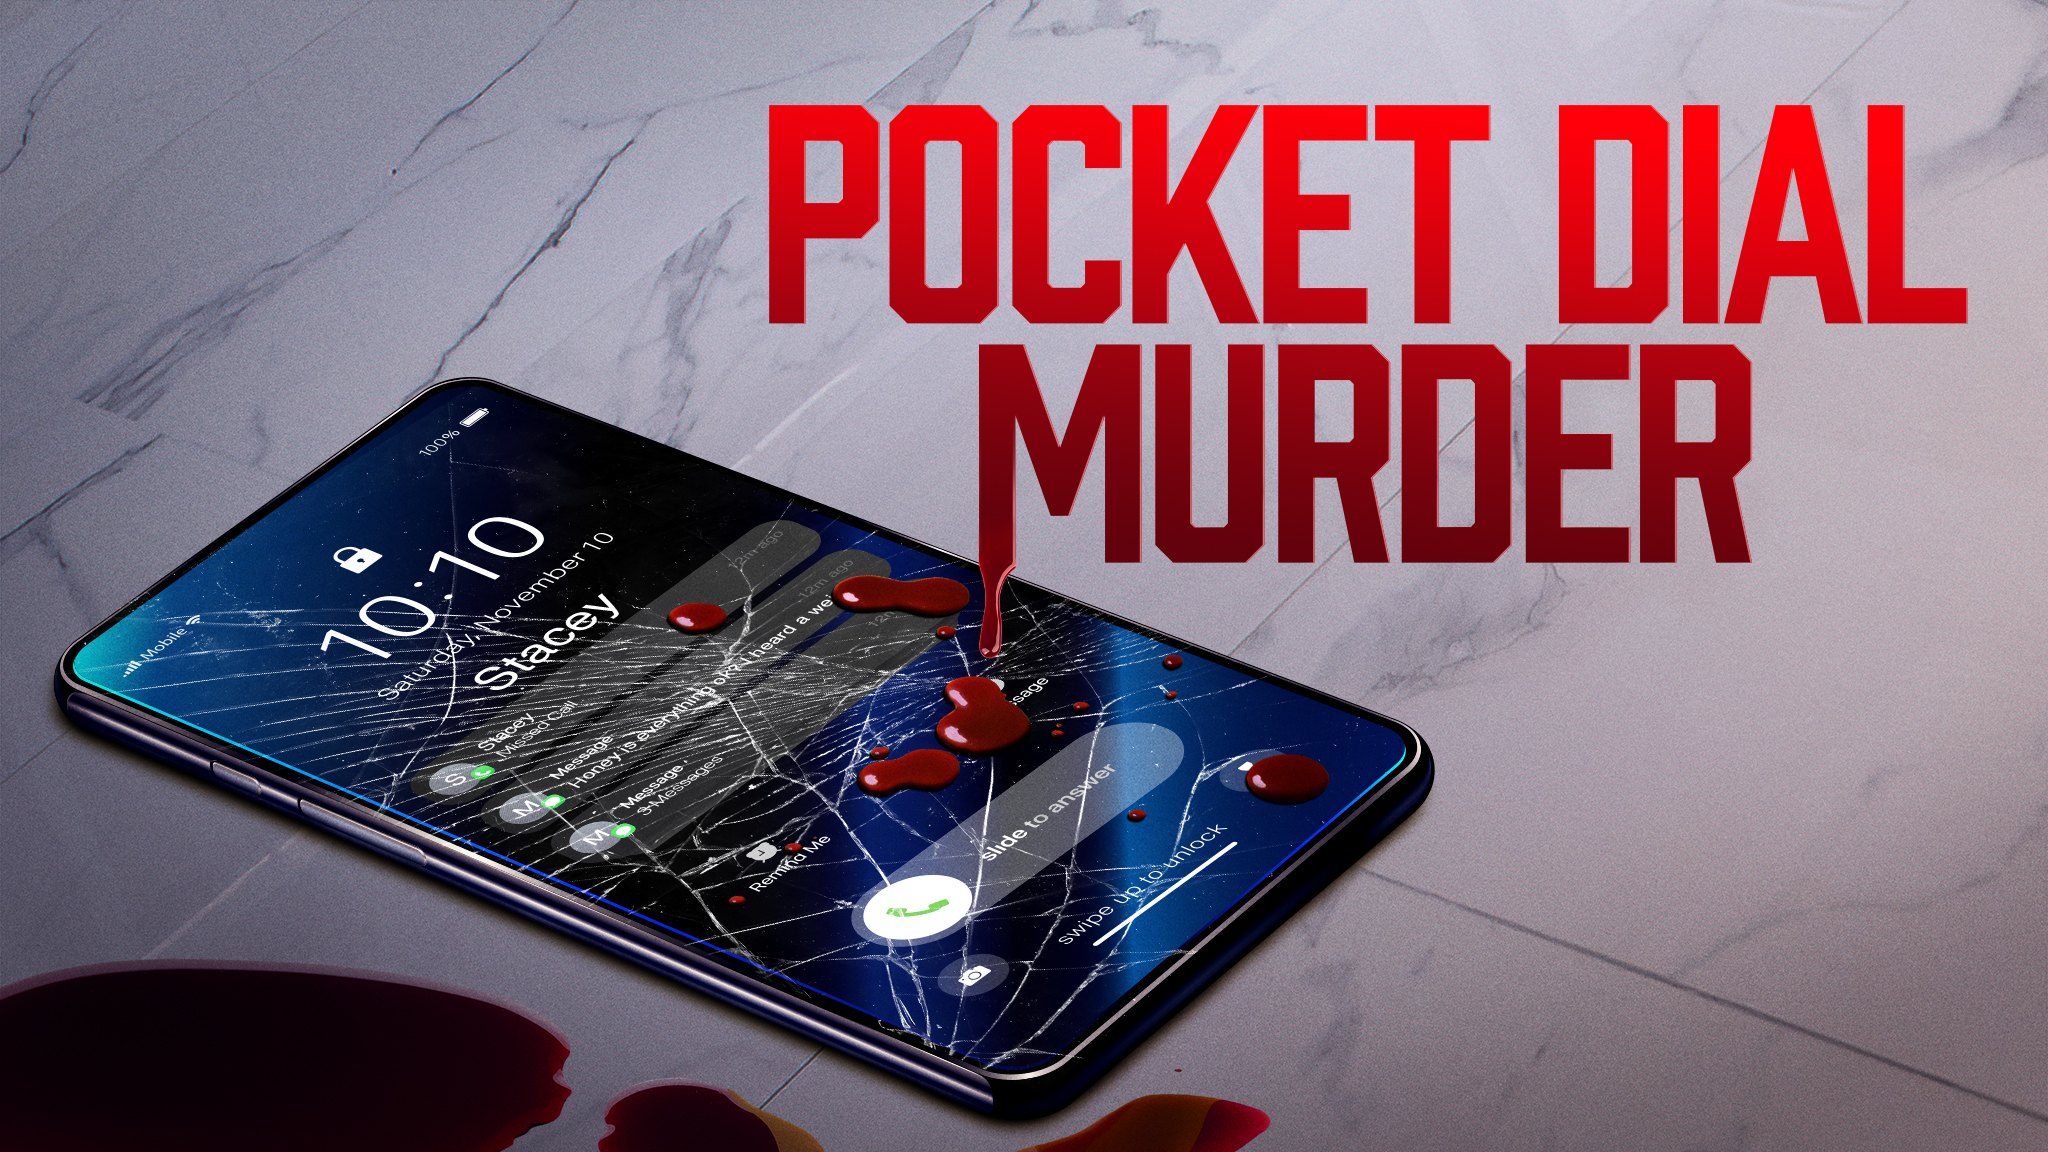 Pocket Dial Murder